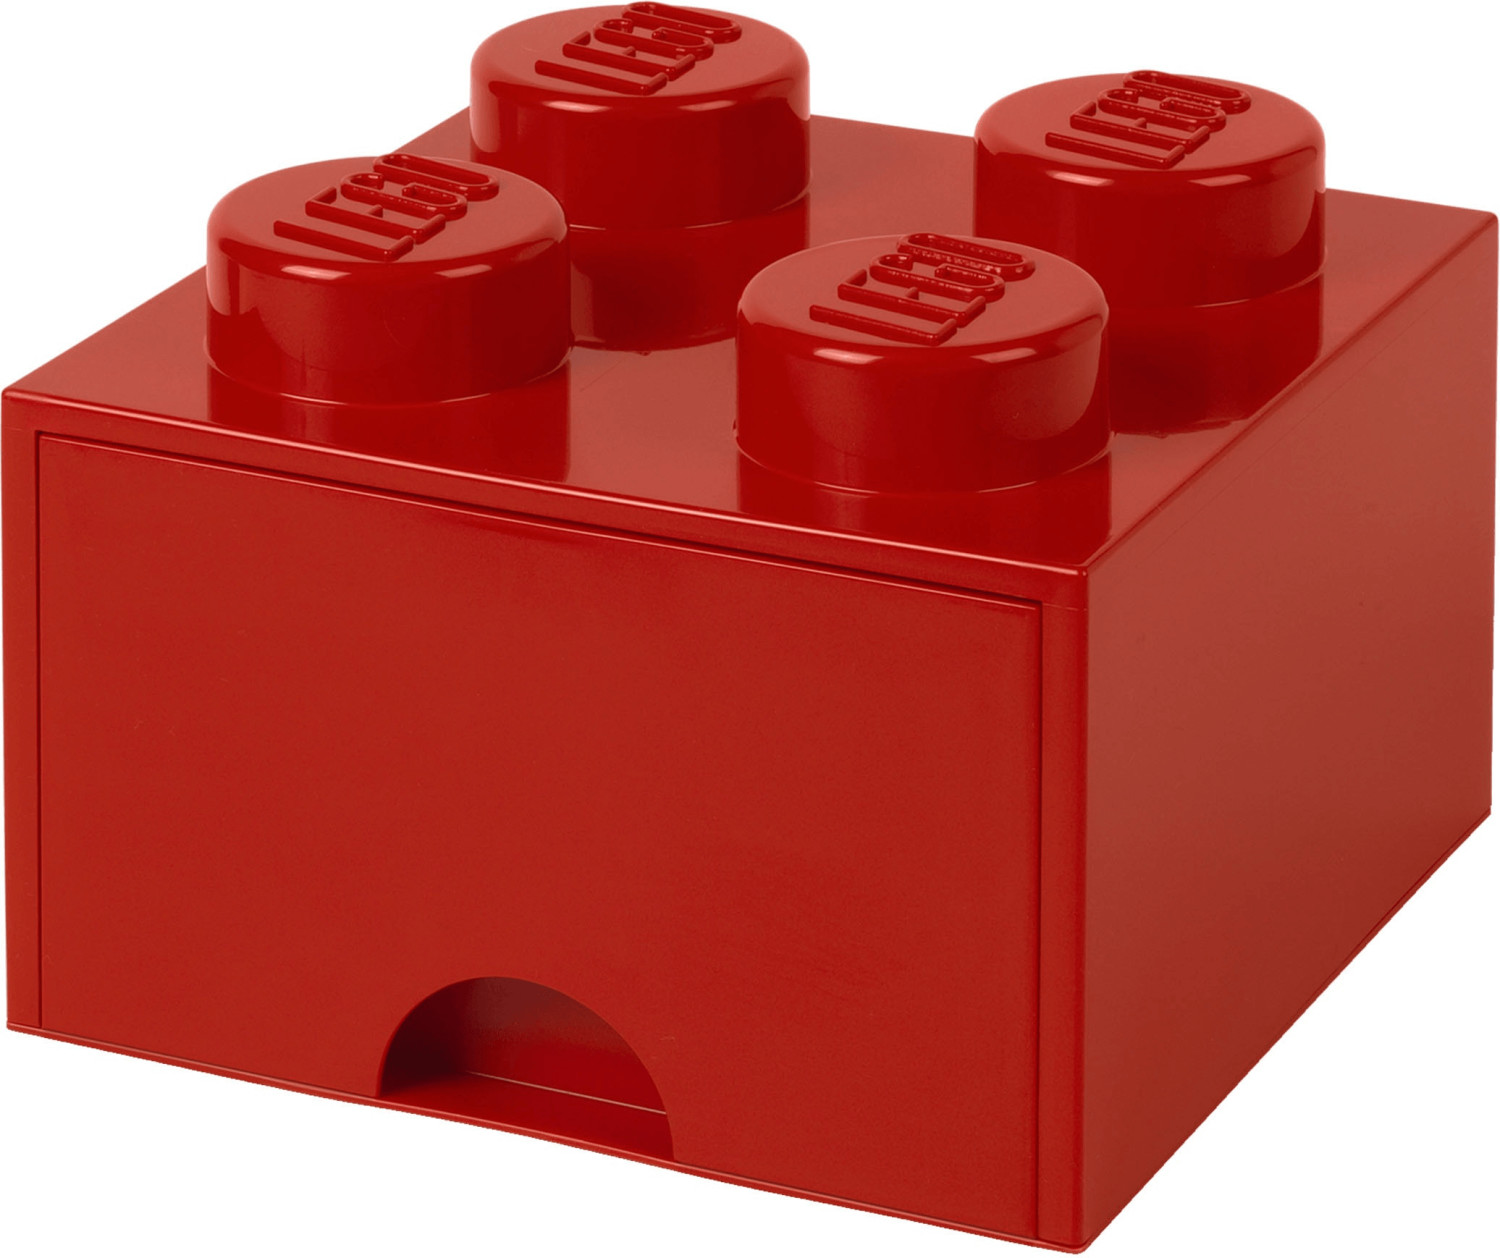 Photos - Kids Furniture Lego Storage Brick Drawer 4 Studs - Red 